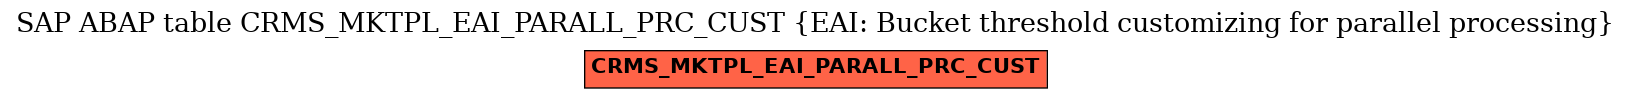 E-R Diagram for table CRMS_MKTPL_EAI_PARALL_PRC_CUST (EAI: Bucket threshold customizing for parallel processing)